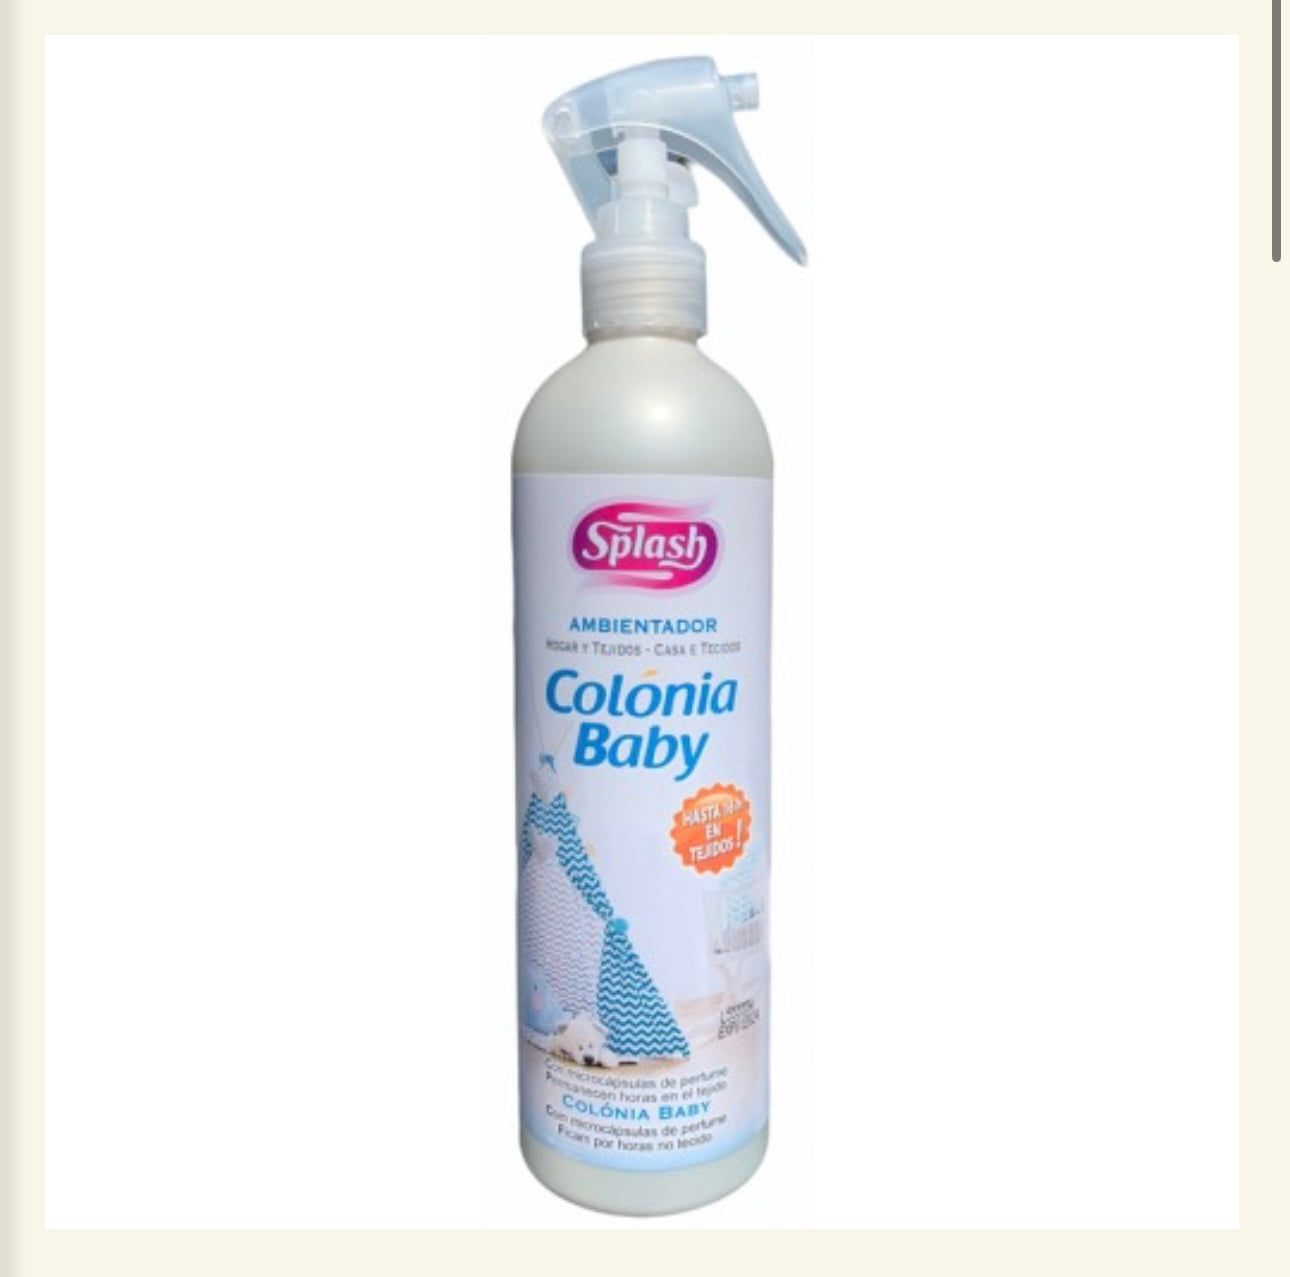 Colonia baby spray